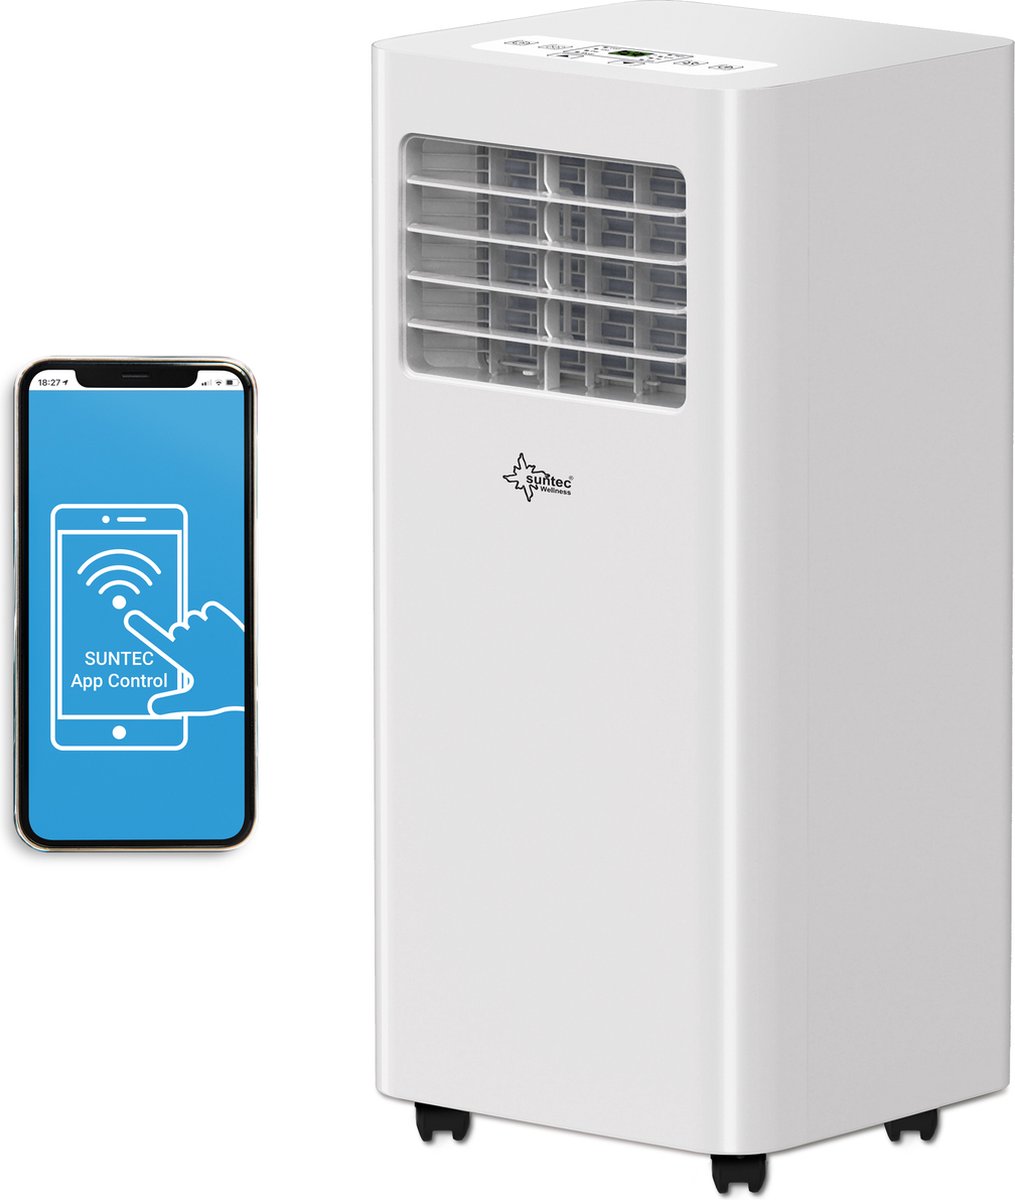 SUNTEC mobiele airco App - 9.000 BTU / 2600 W - air conditioner portable met Smart Home & WiFi - mobile airconditioning voor tot 34m² - 3 in 1 functie